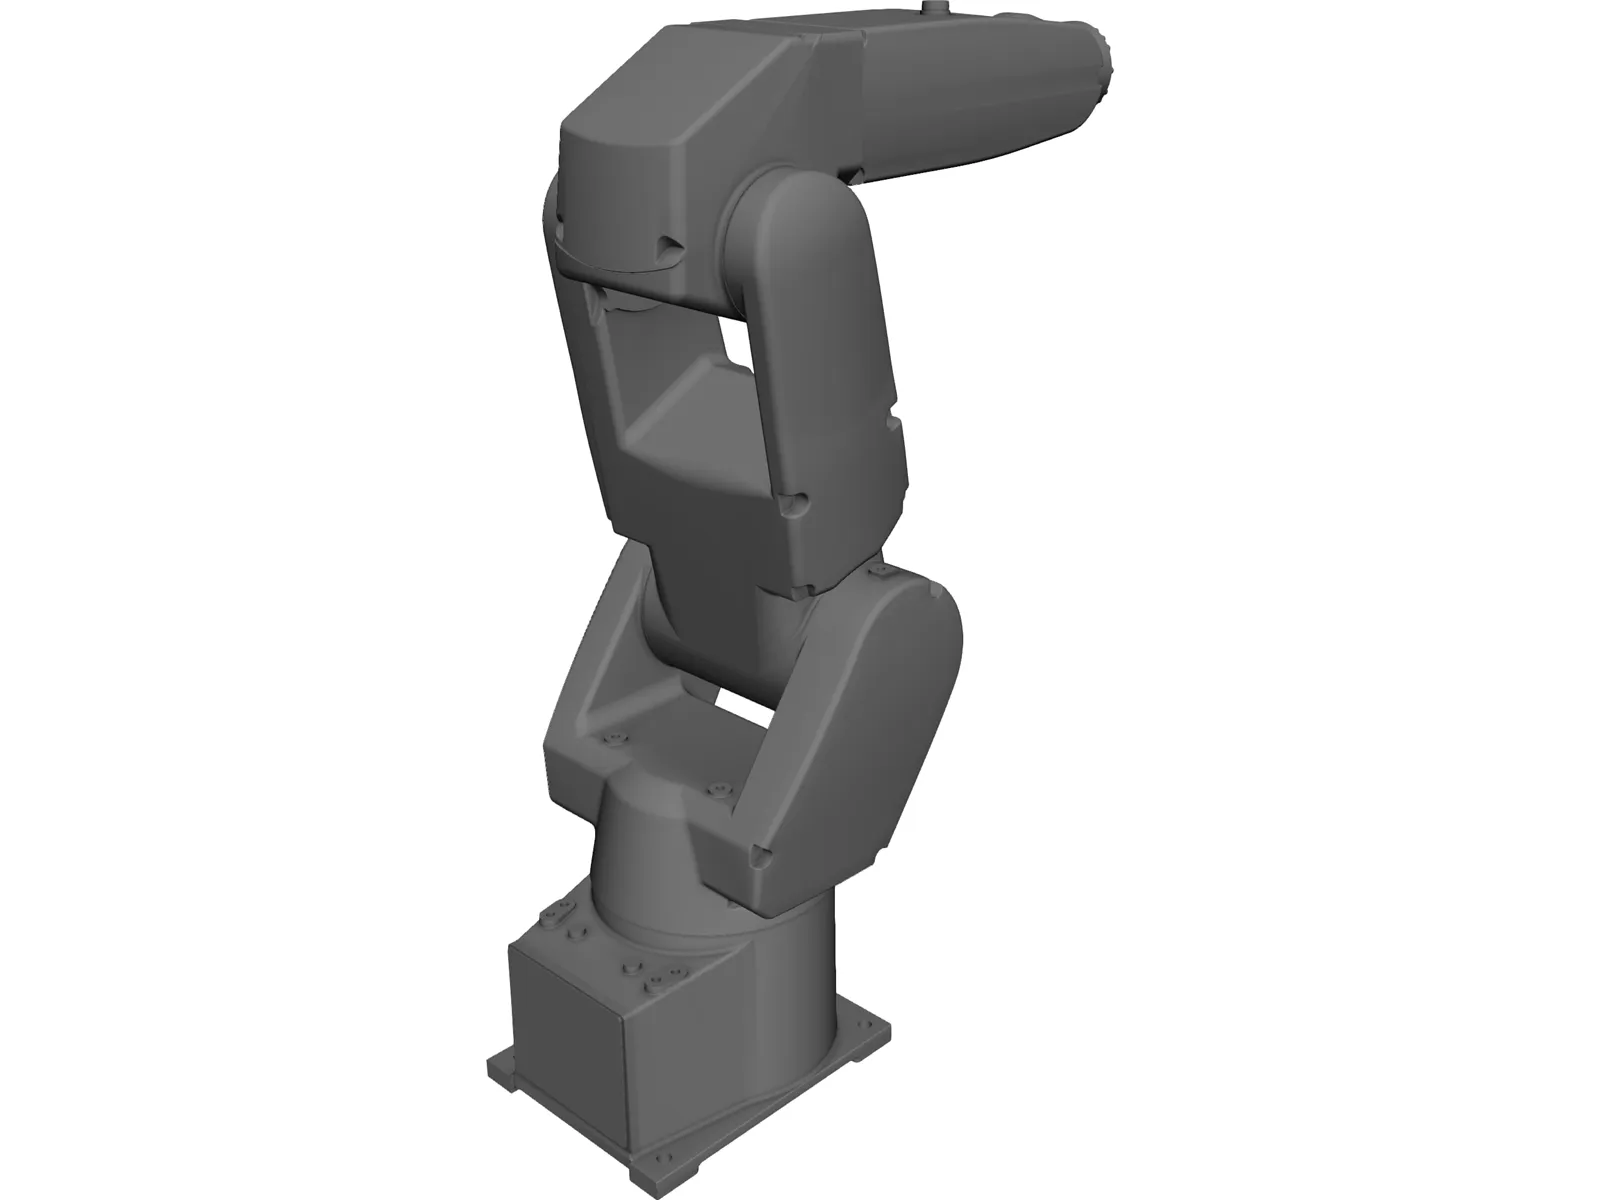 Fanuc LR Mate Robot 3D Model